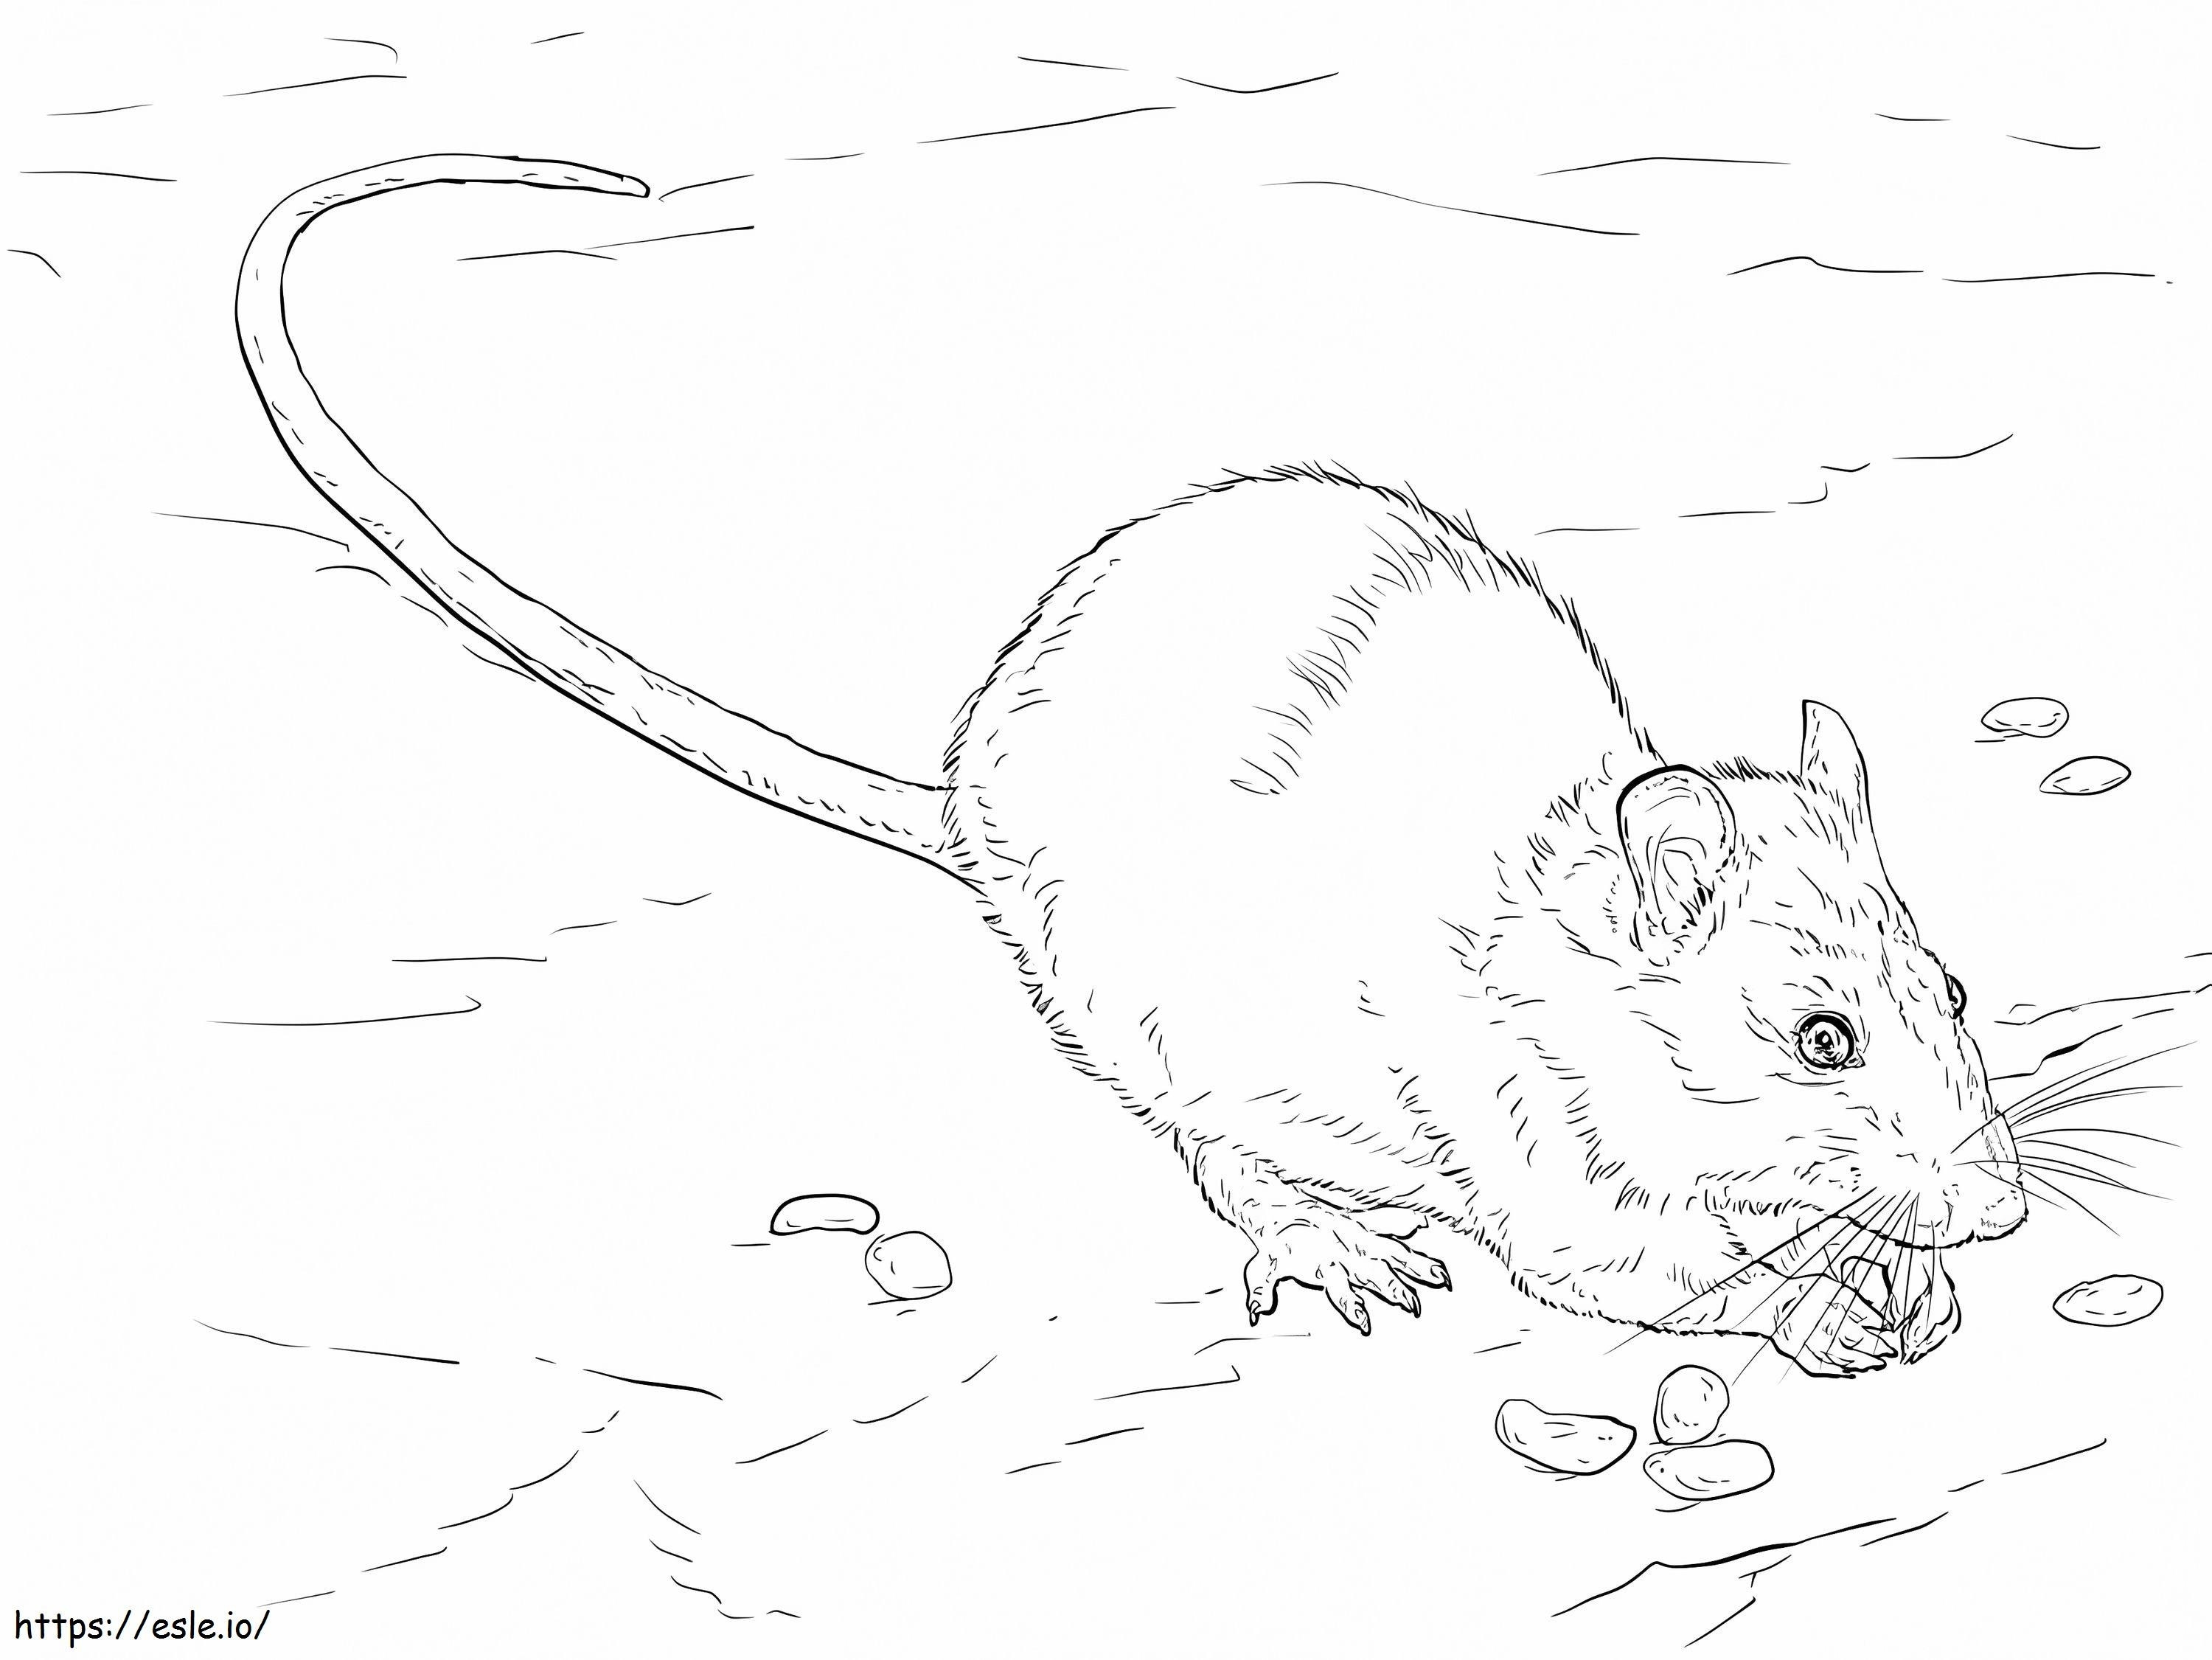 Brown Rat coloring page